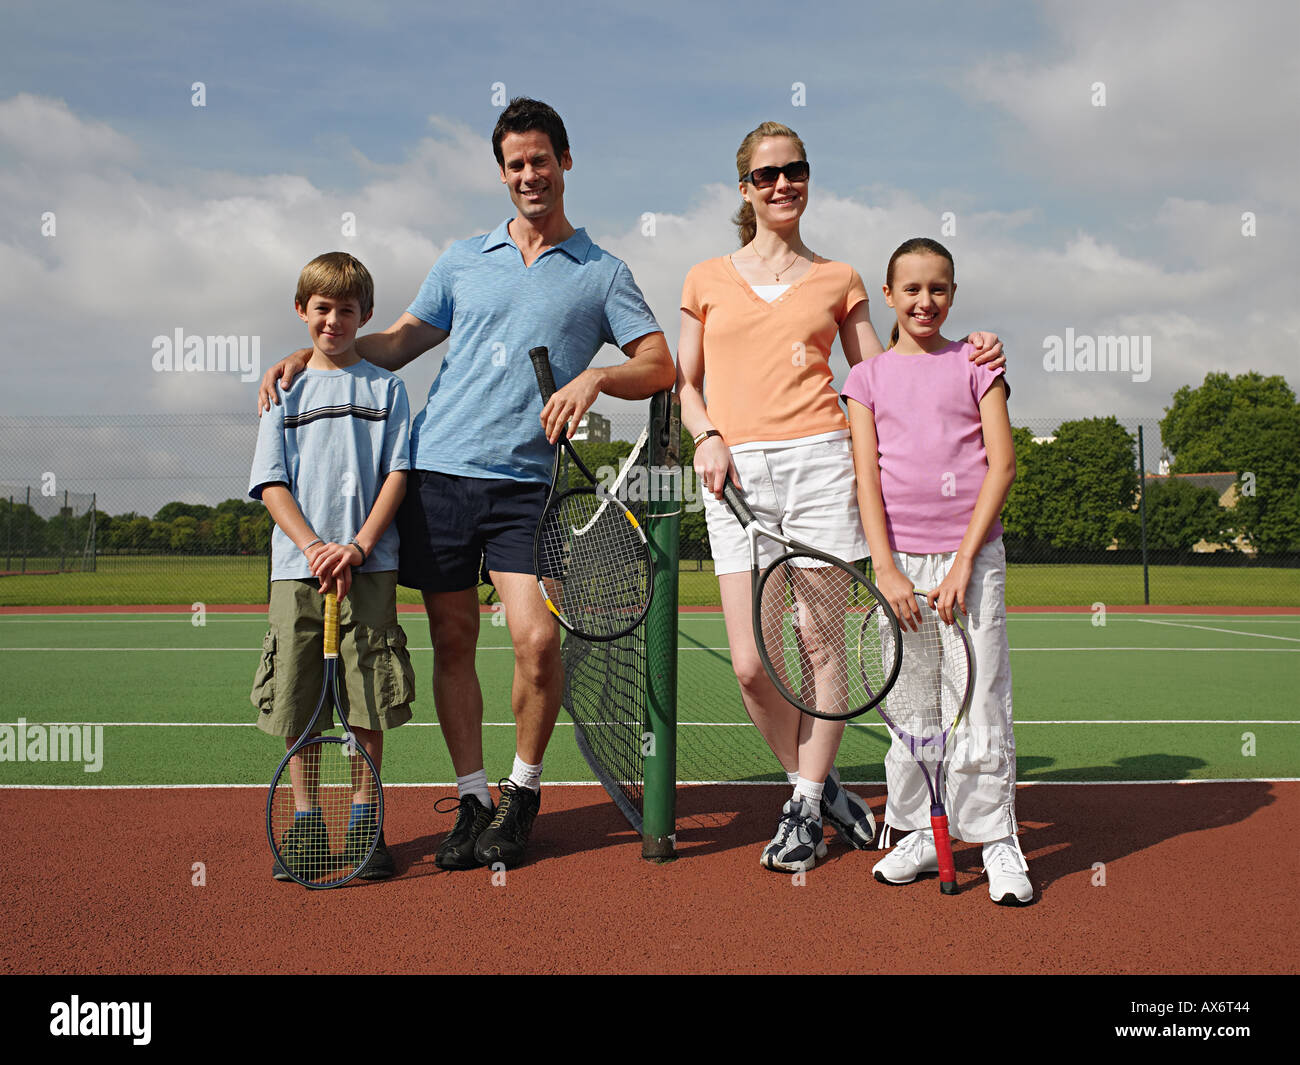 Family on a tennis court Stock Photo